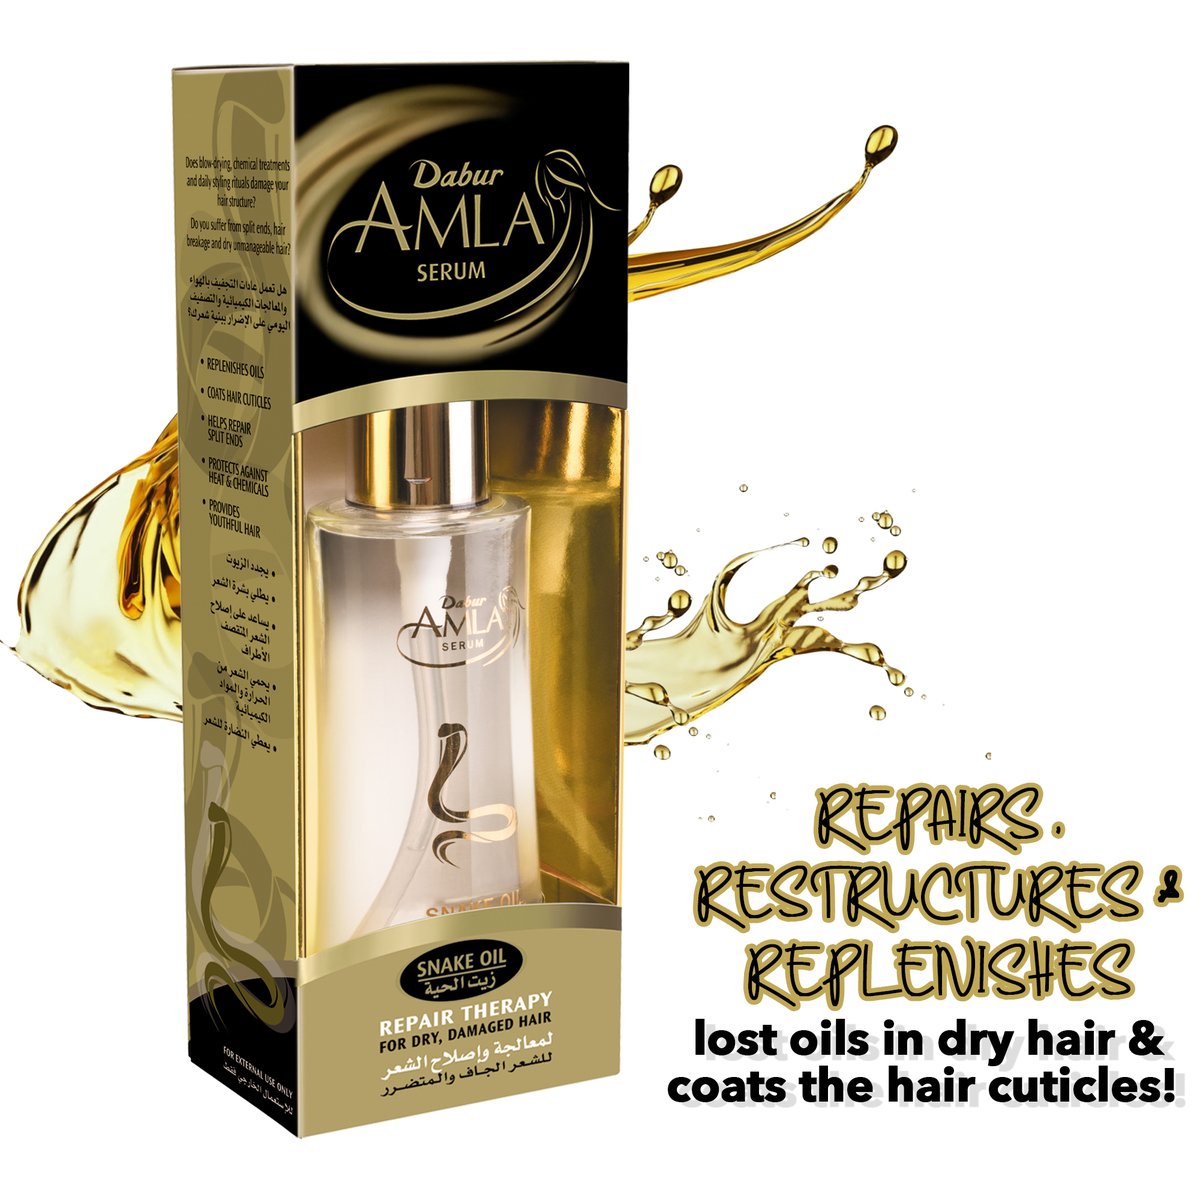 Dabur Amla Hair Serum Snake Oil Repair Therapy 50 ml